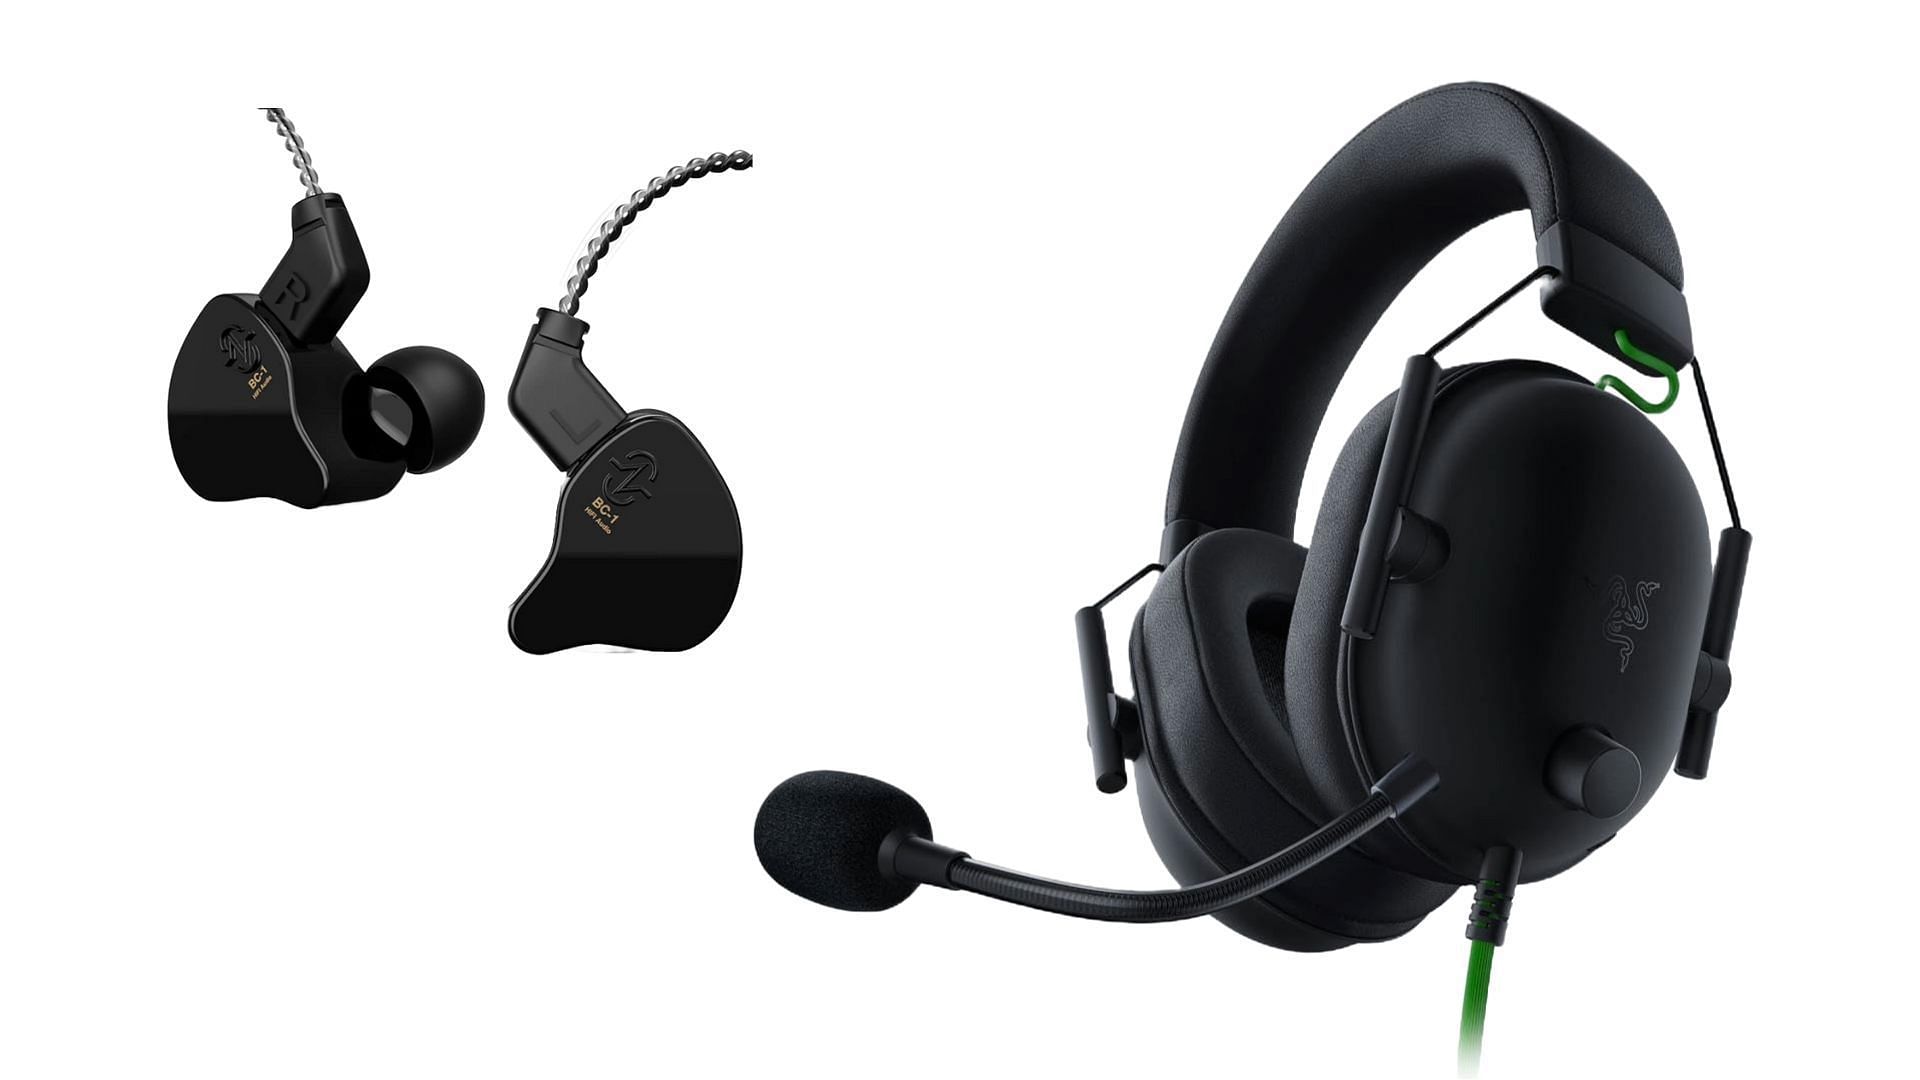 Headphones - best gaming accessories for PUBG Mobile (Image via Amazon)